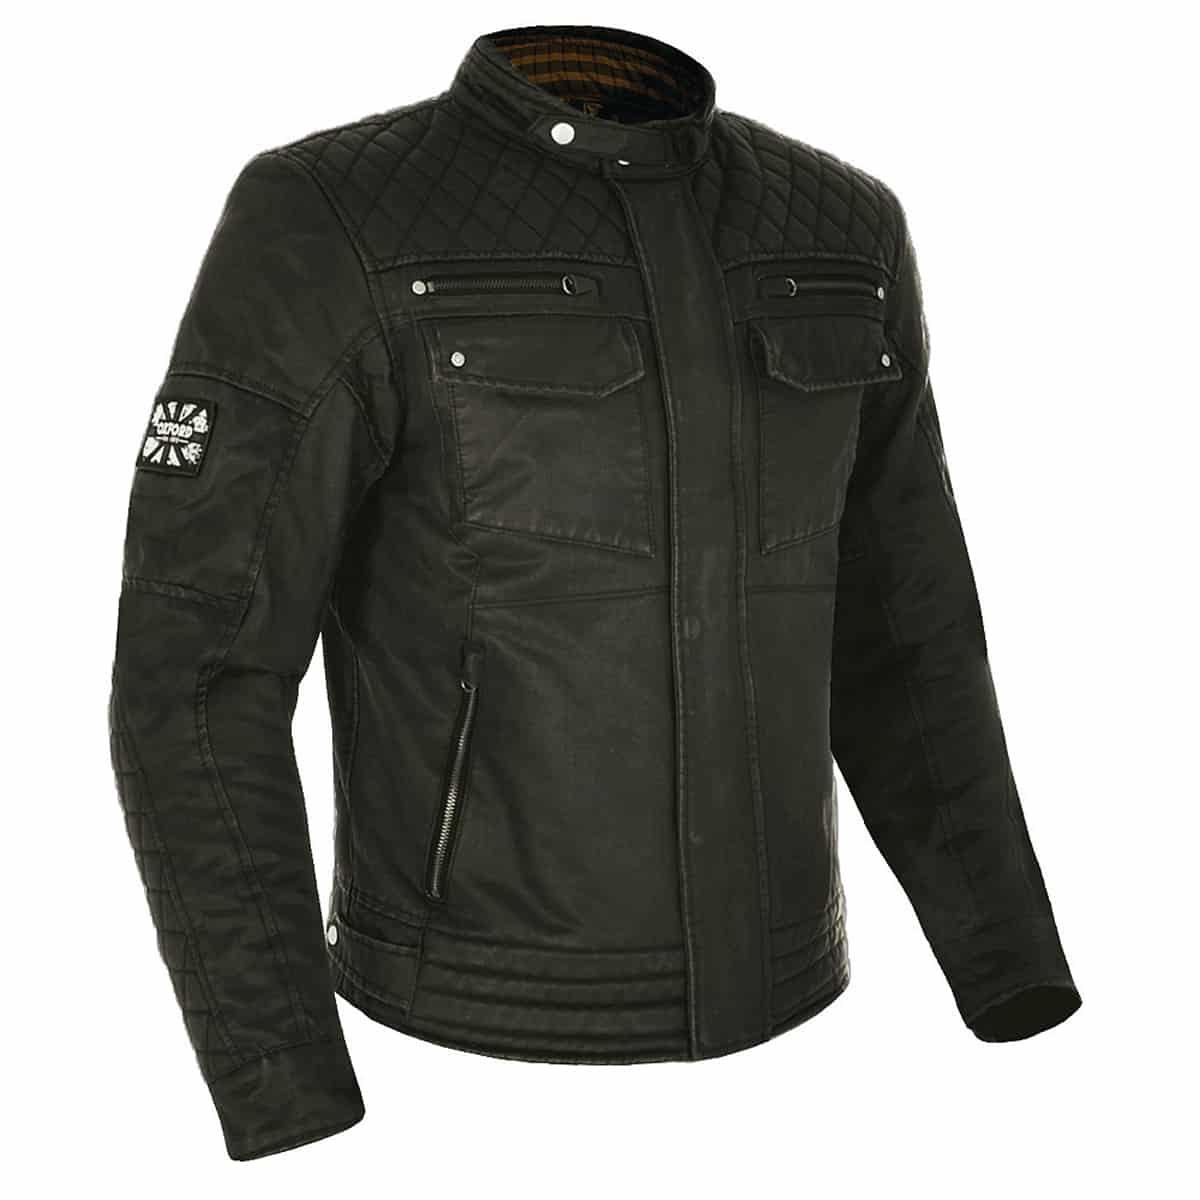 Oxford Hardy Wax Jacket WP - Olive - Browse our range of Clothing: Jackets - getgearedshop 